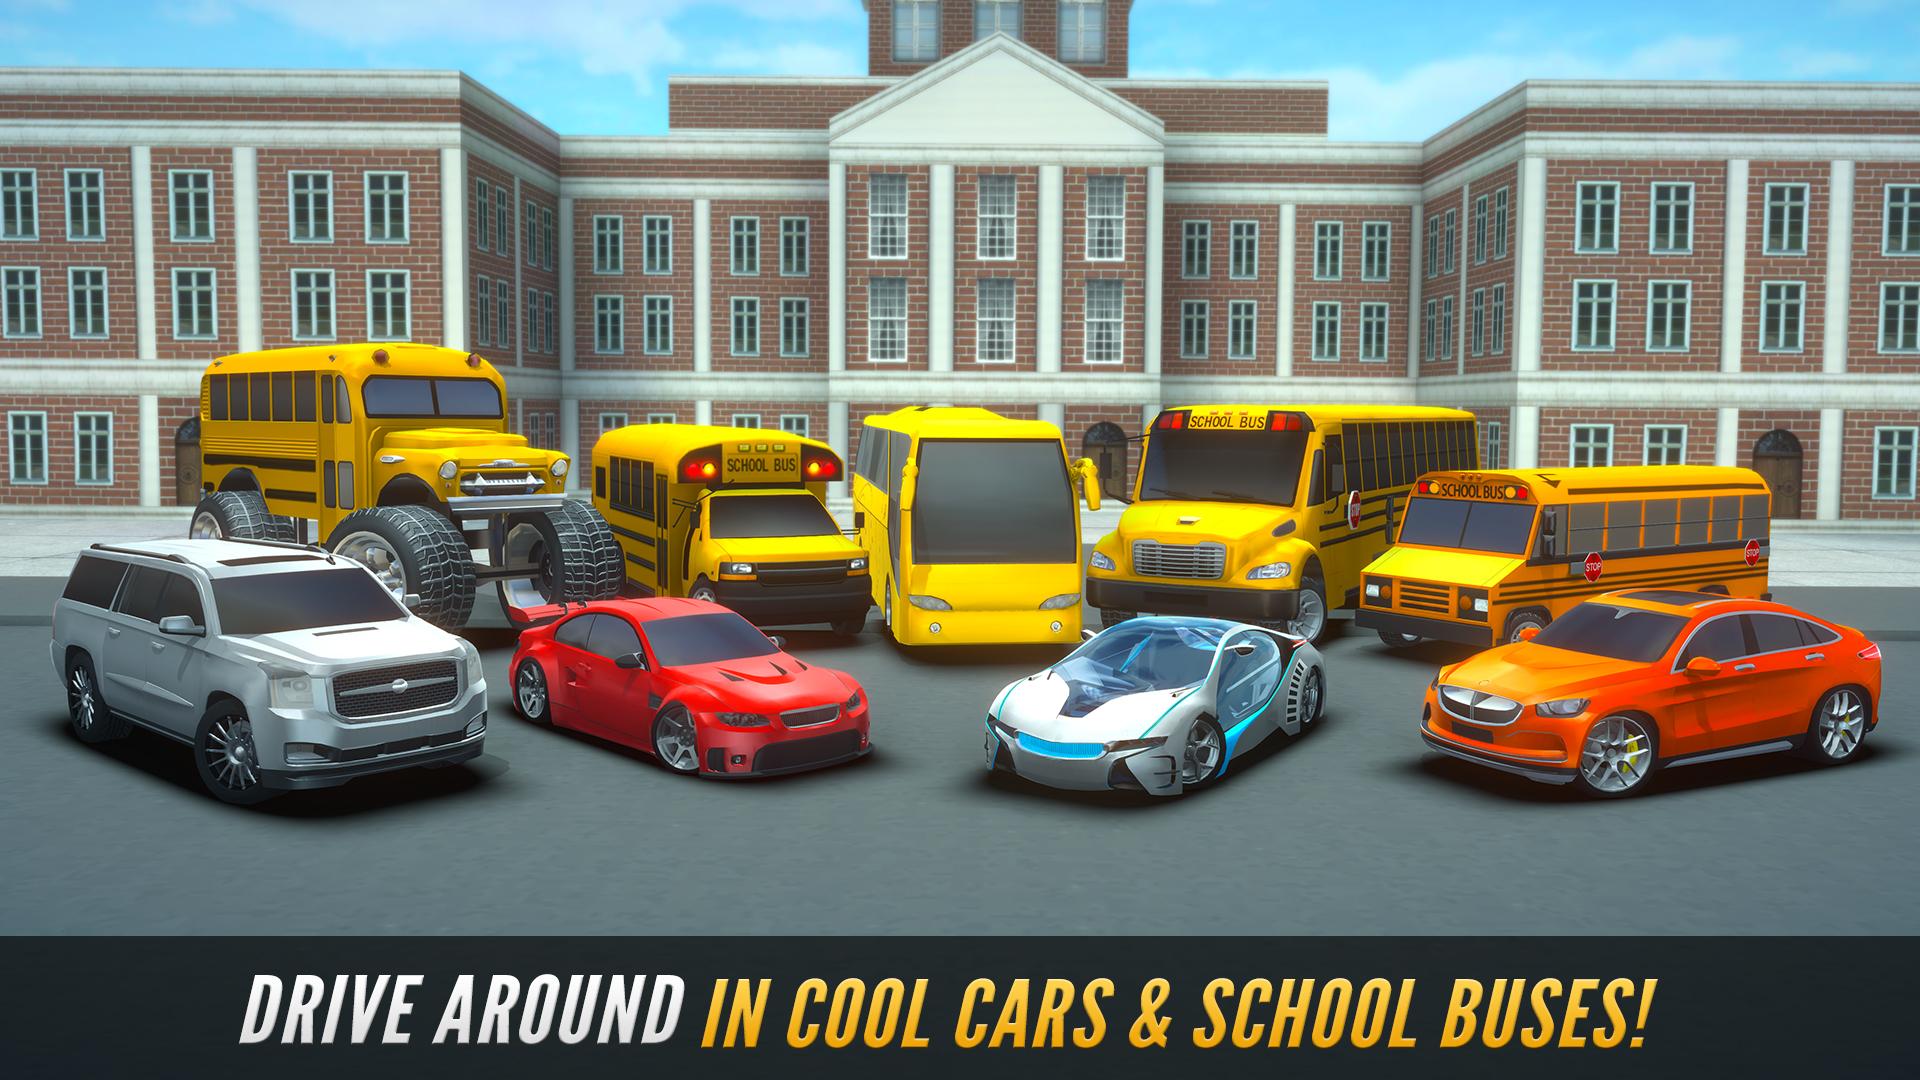 Super High School Bus Driving Simulator 3D - 2020 2.5 Screenshot 20